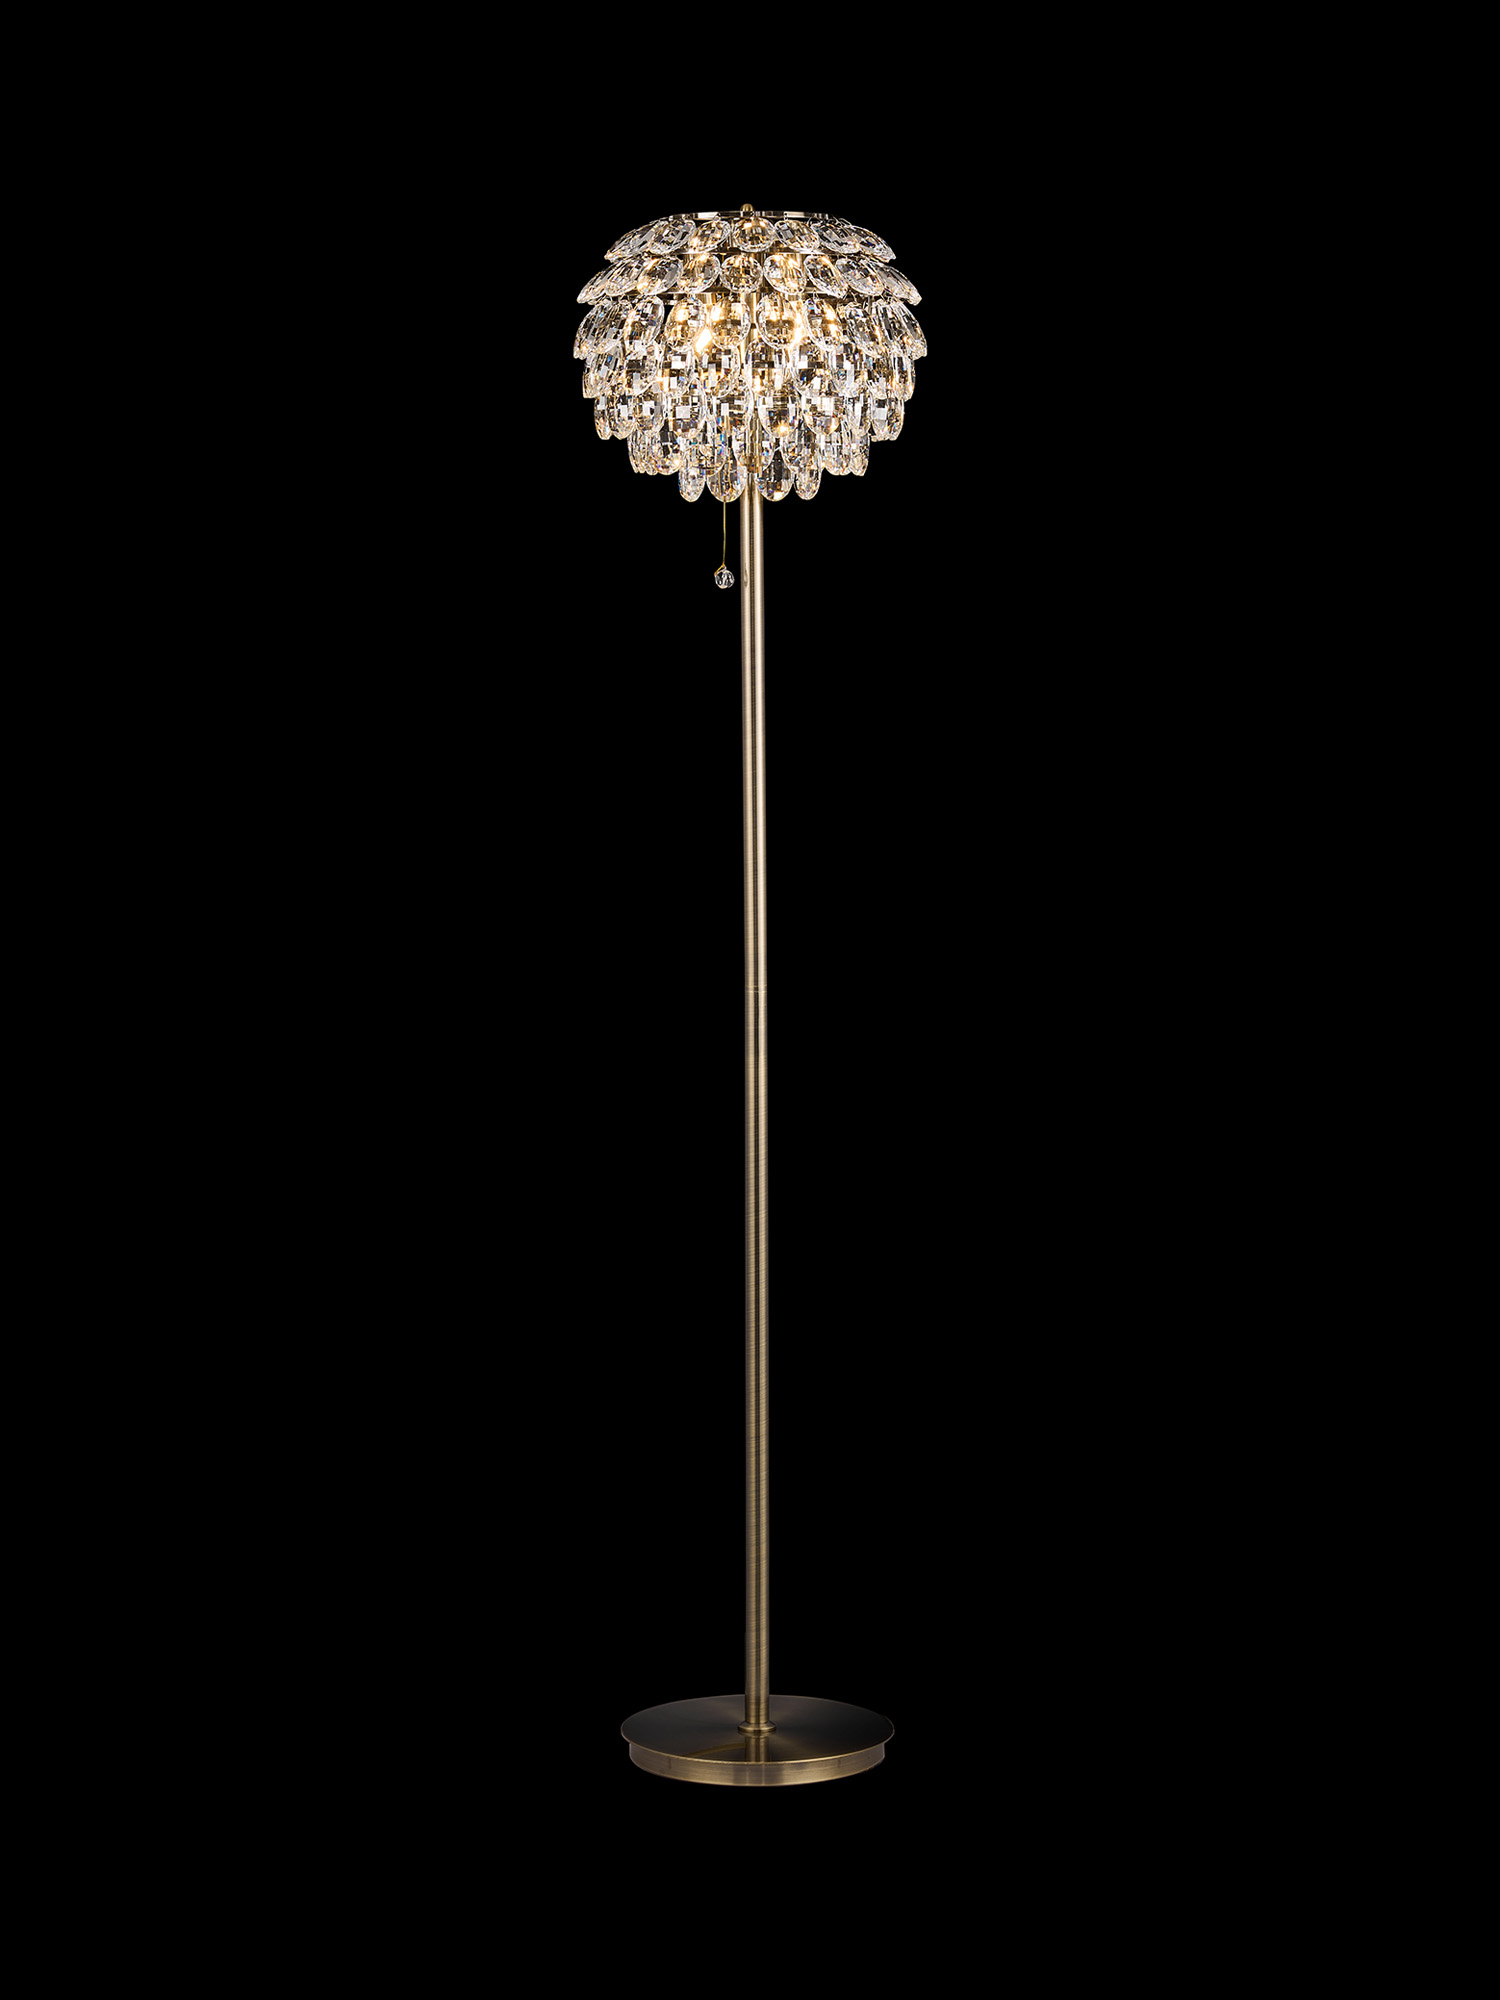 IL32837AB  Coniston Floor Lamp 3 Light Antique Brass